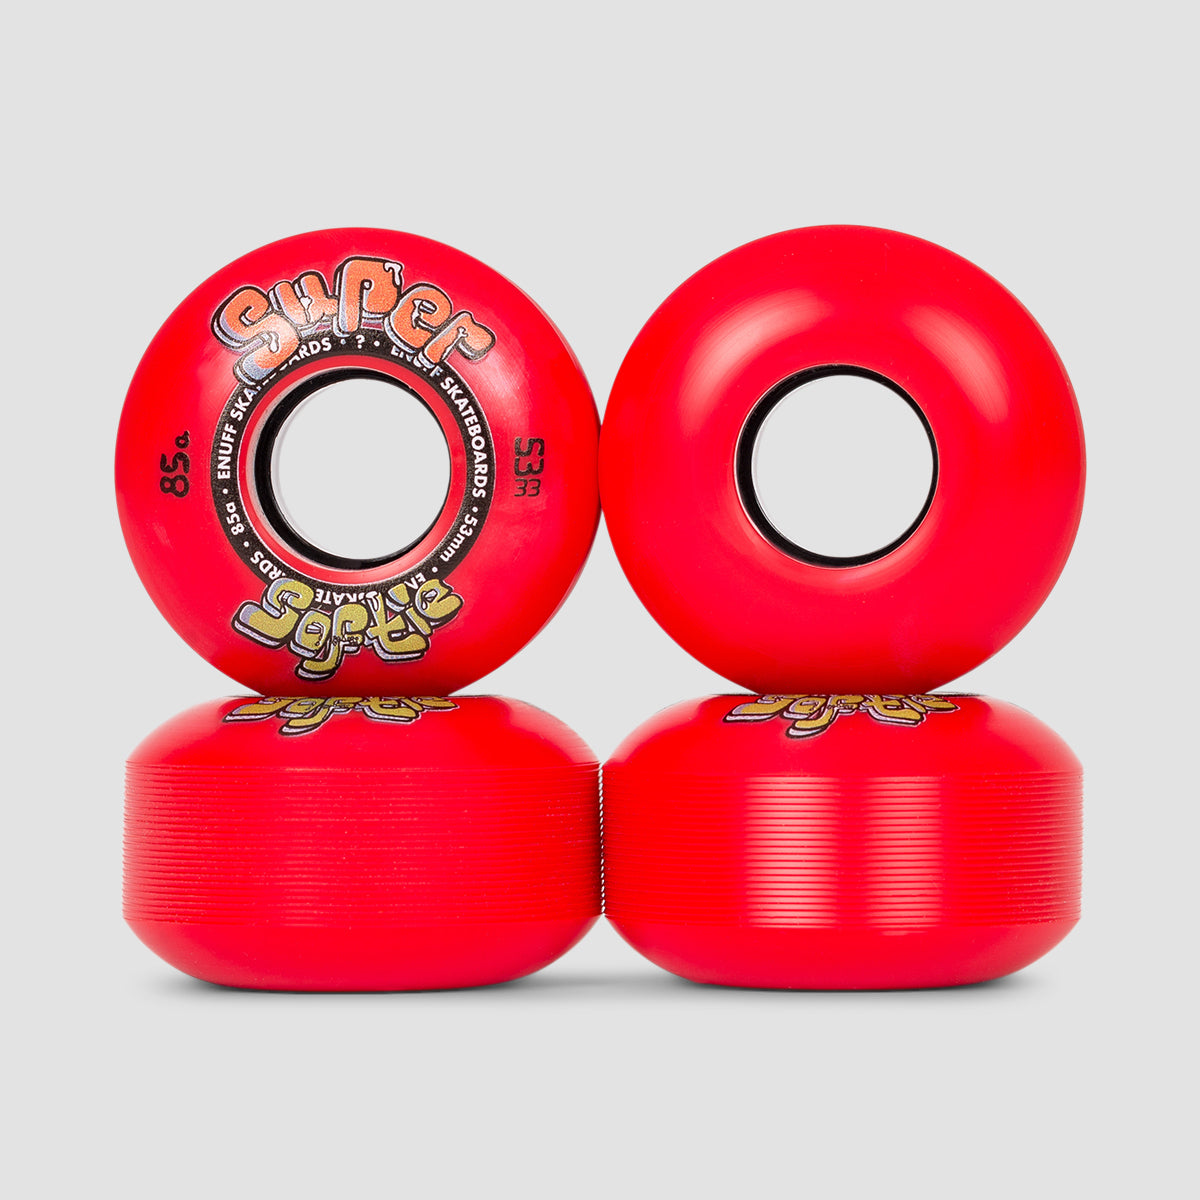 Enuff Super Softie Skateboard Wheels Red 53mm